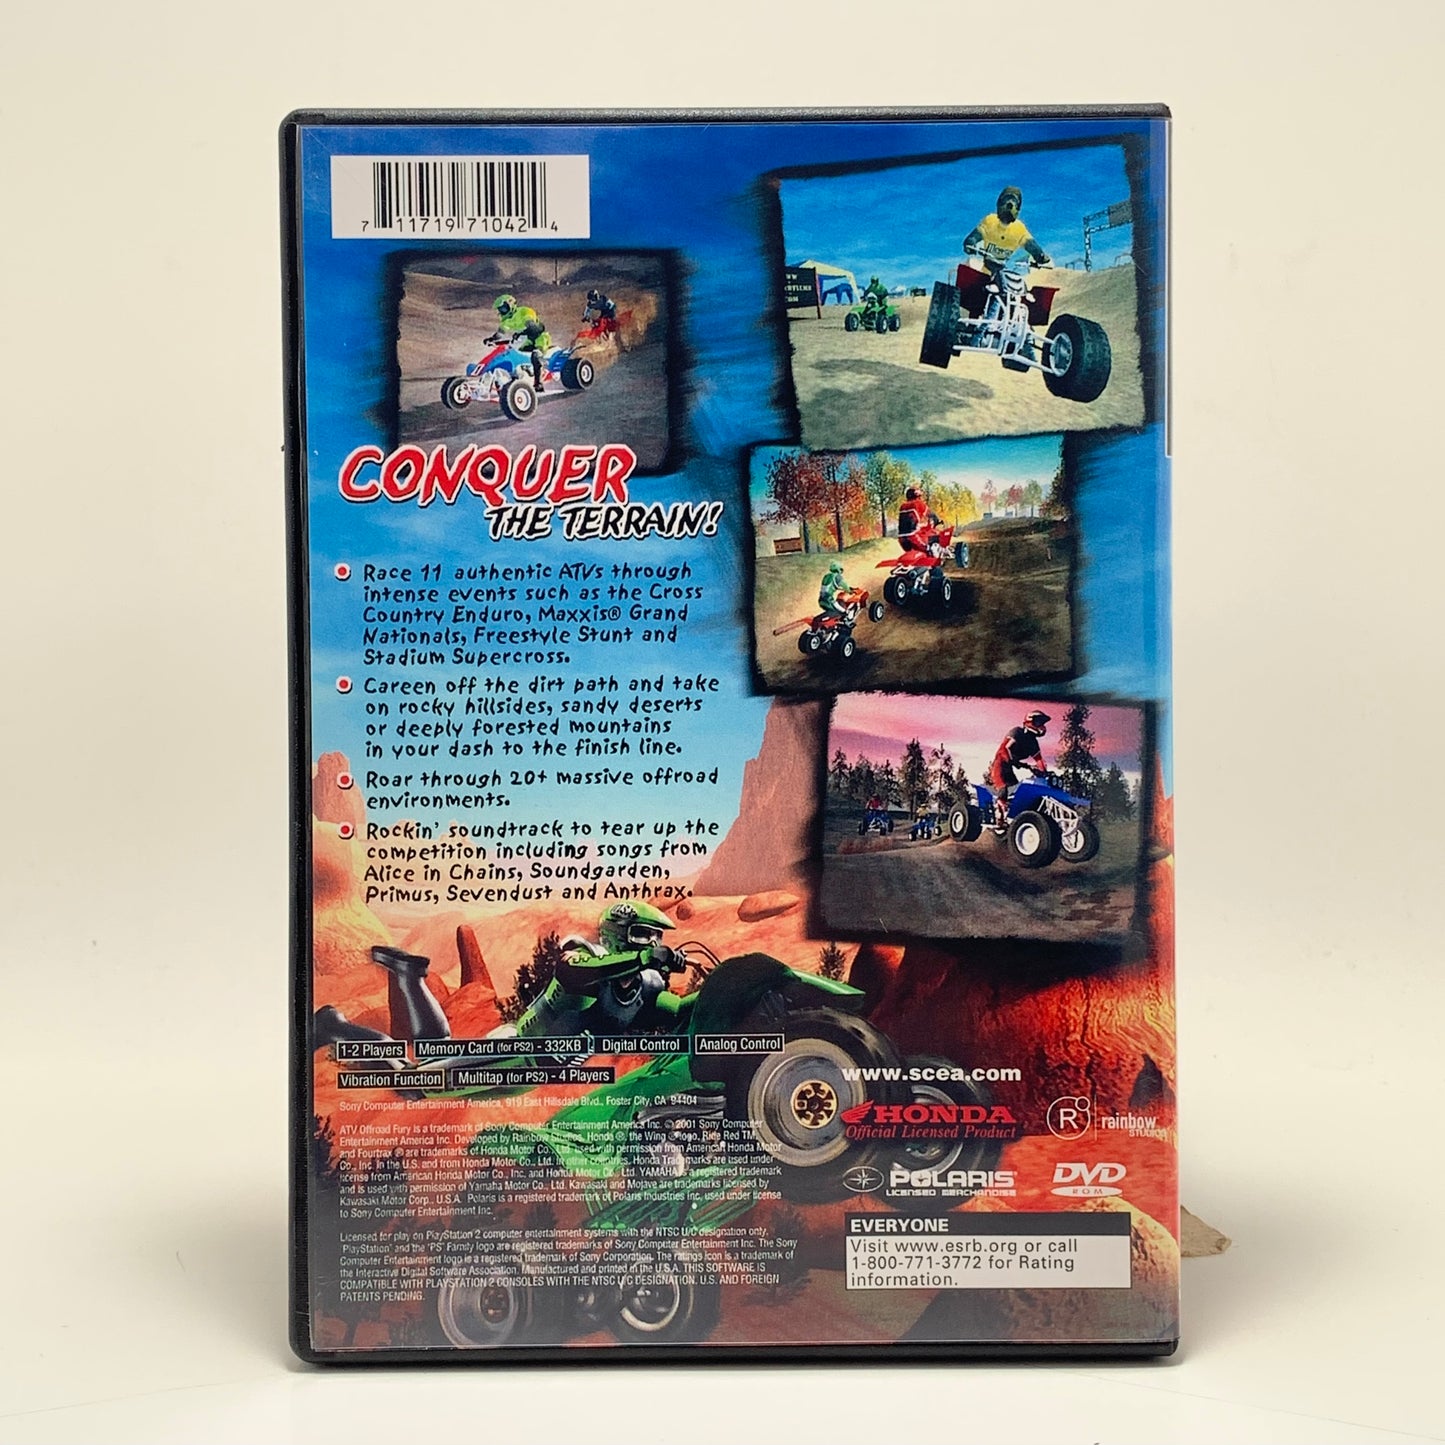 PS2 - NO GAME - ATV Off Road Fury